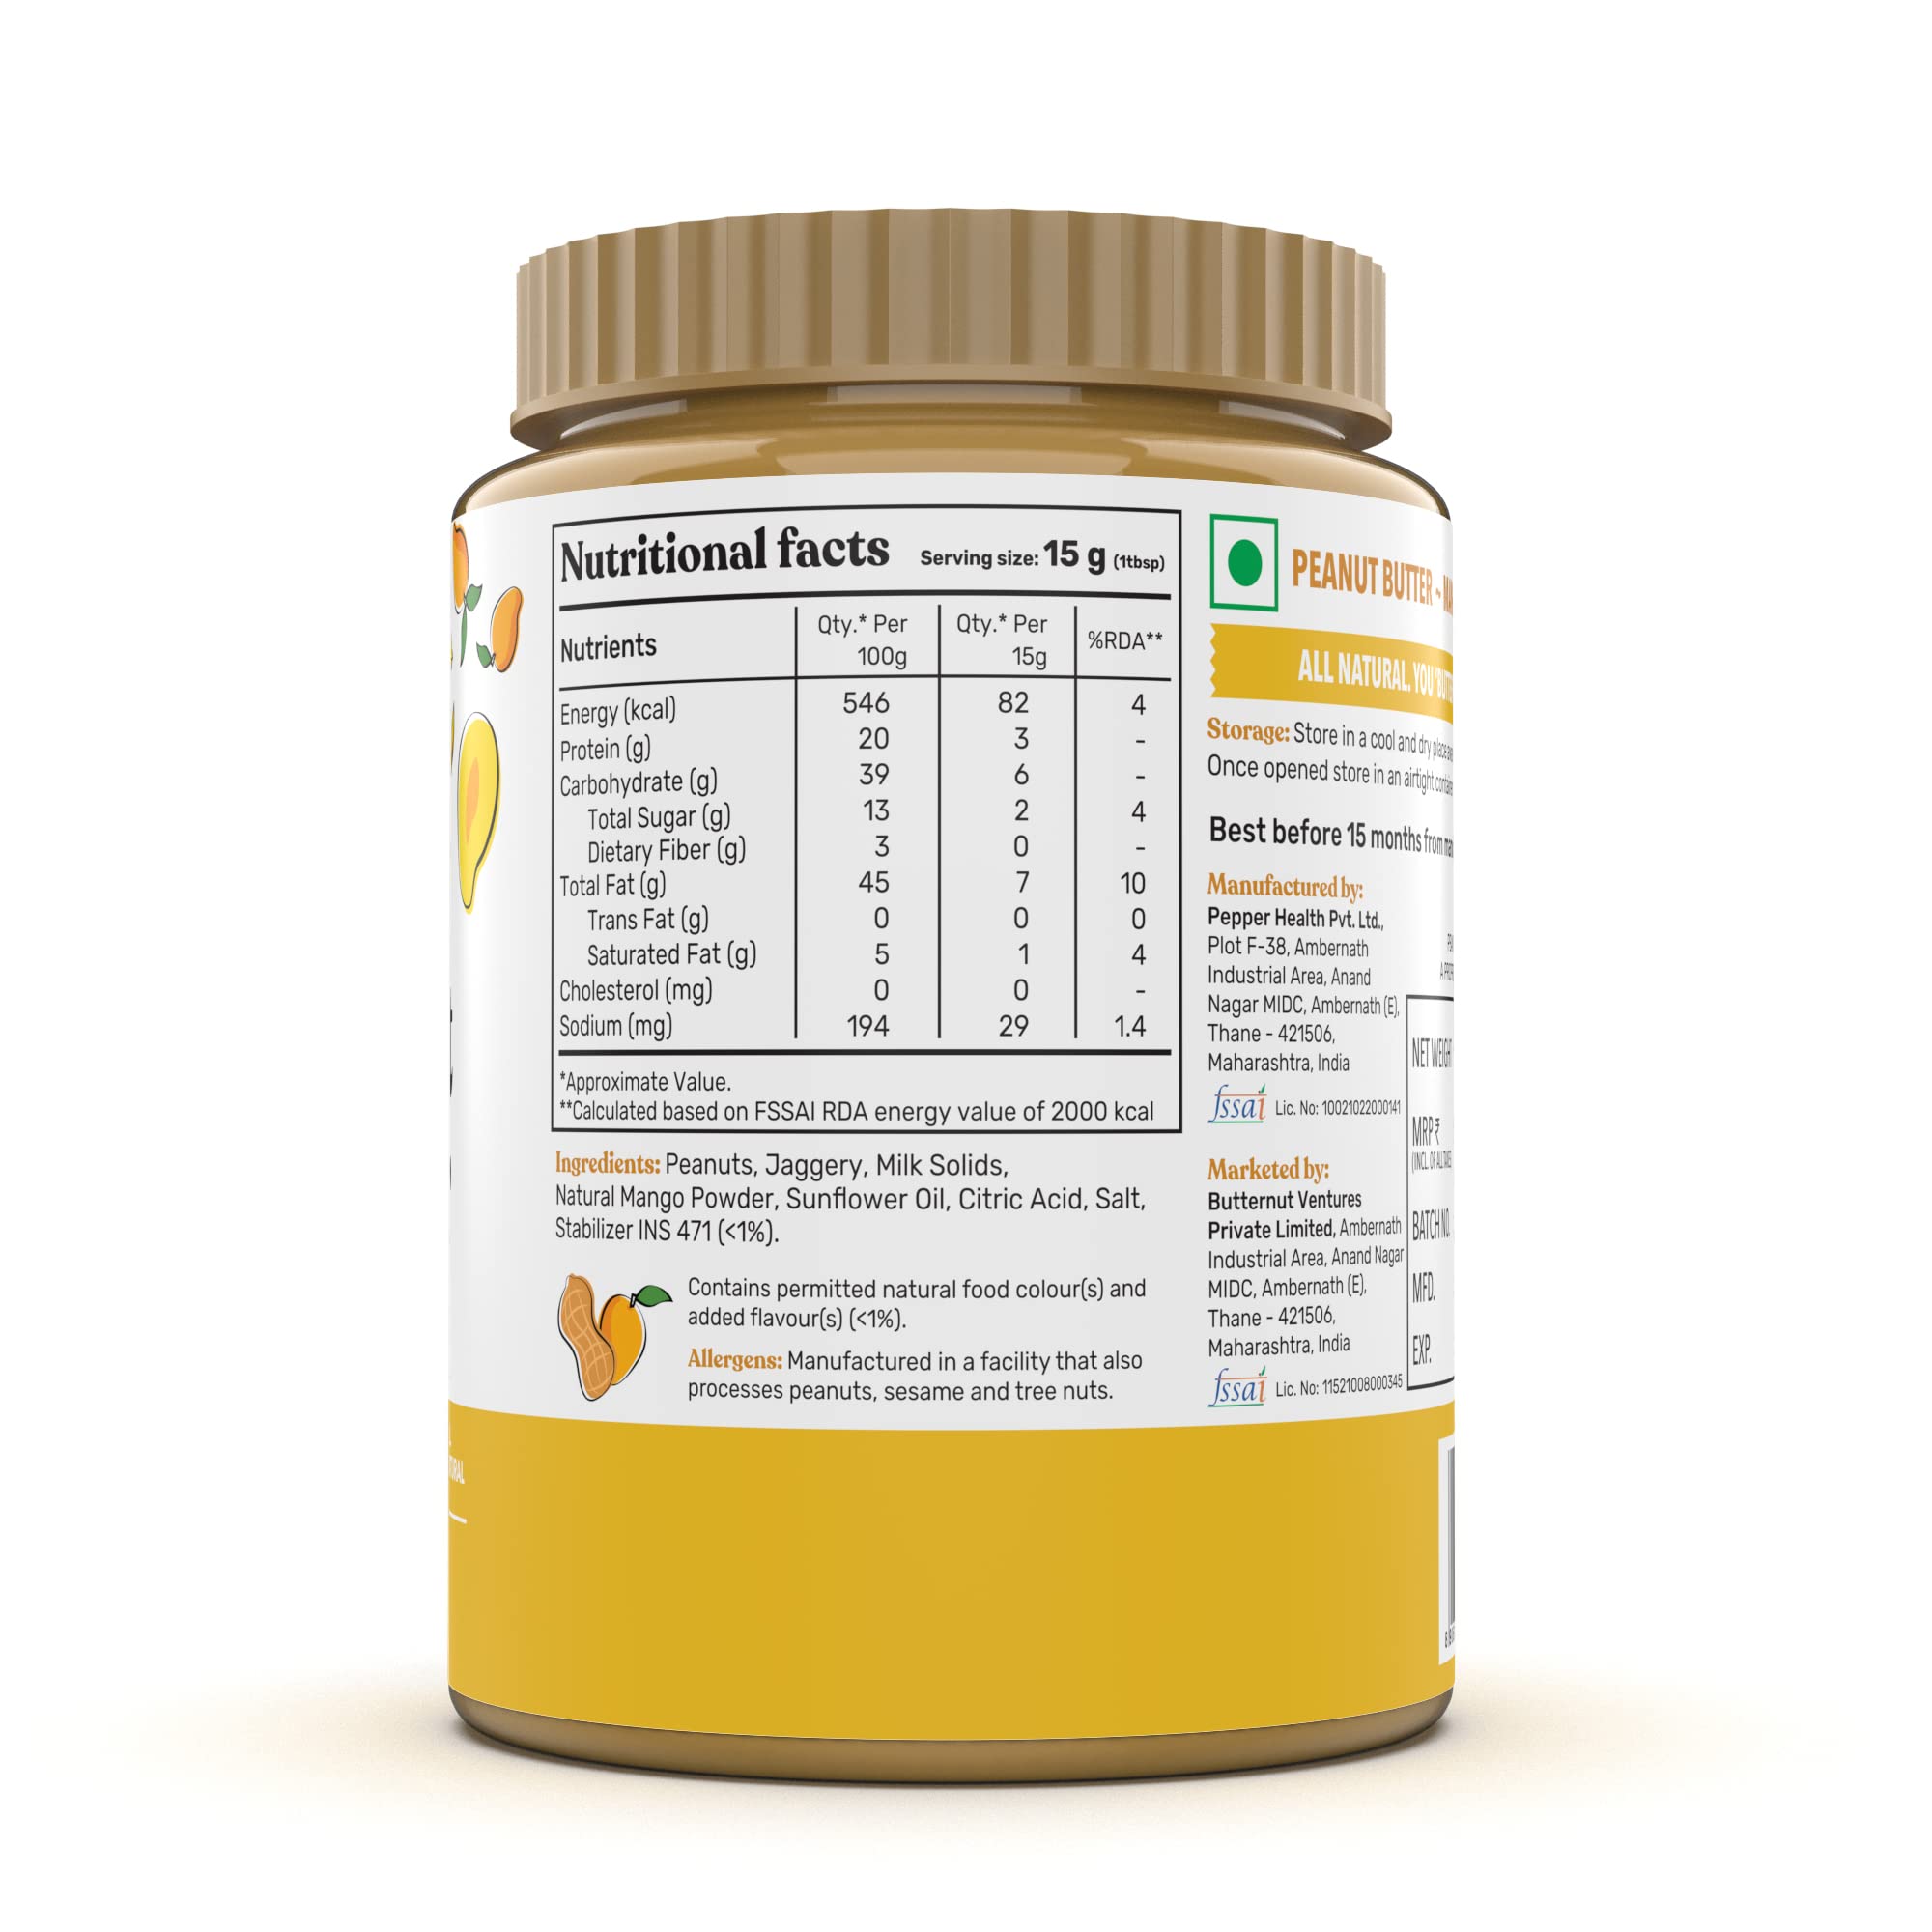 The Butternut Co. Mango Peanut Butter (Creamy) 925g | 20 g Protein | No Refined Sugar | Natural | Gluten Free | Cholesterol Free | No Trans Fat